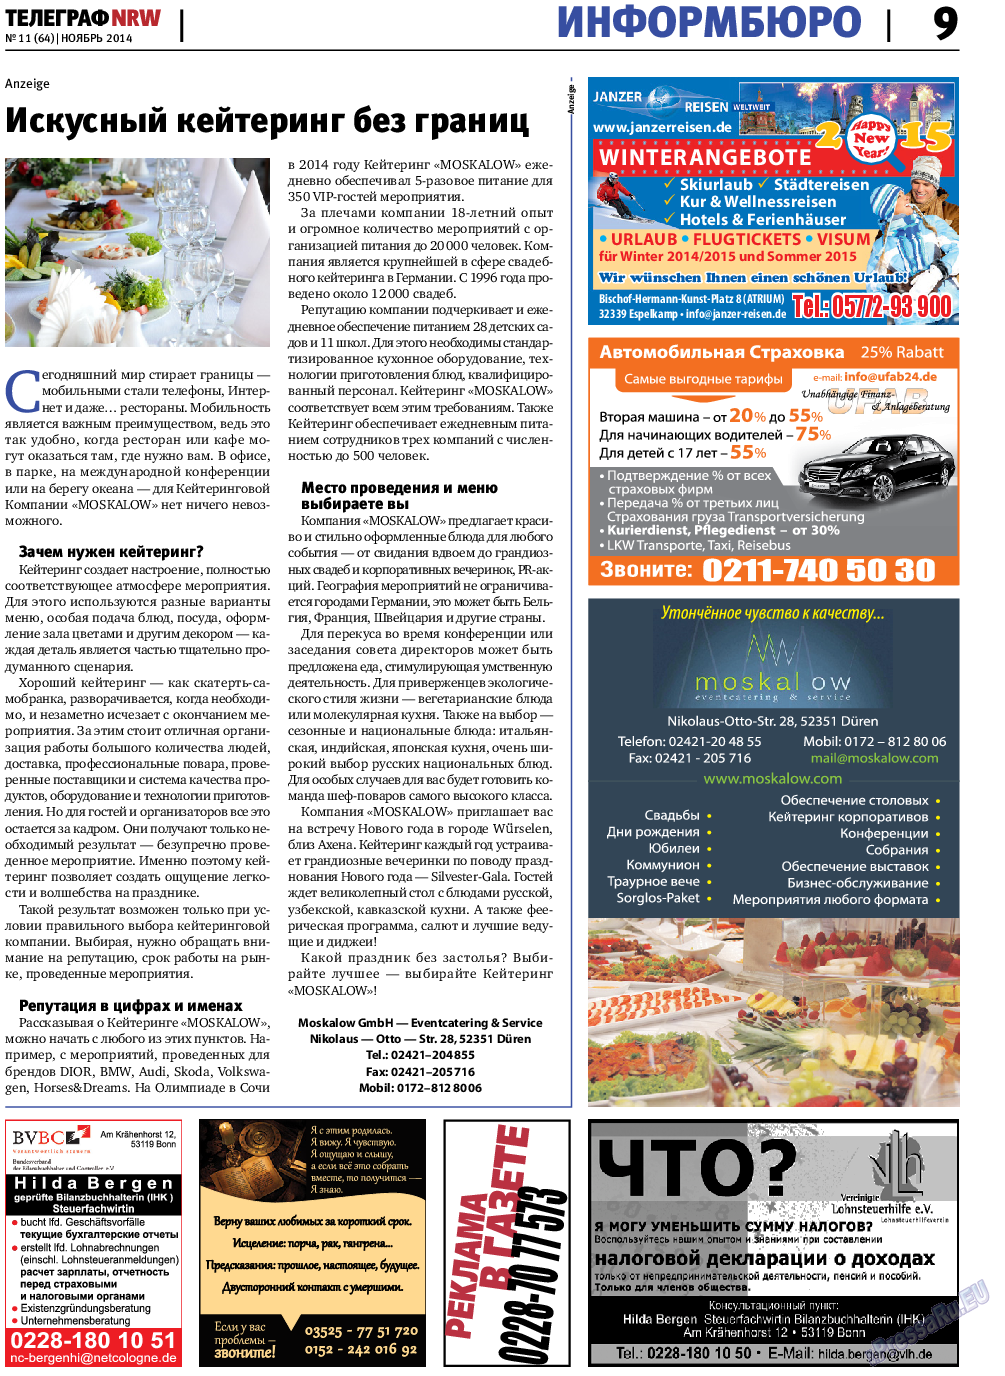 Телеграф NRW, газета. 2014 №11 стр.9